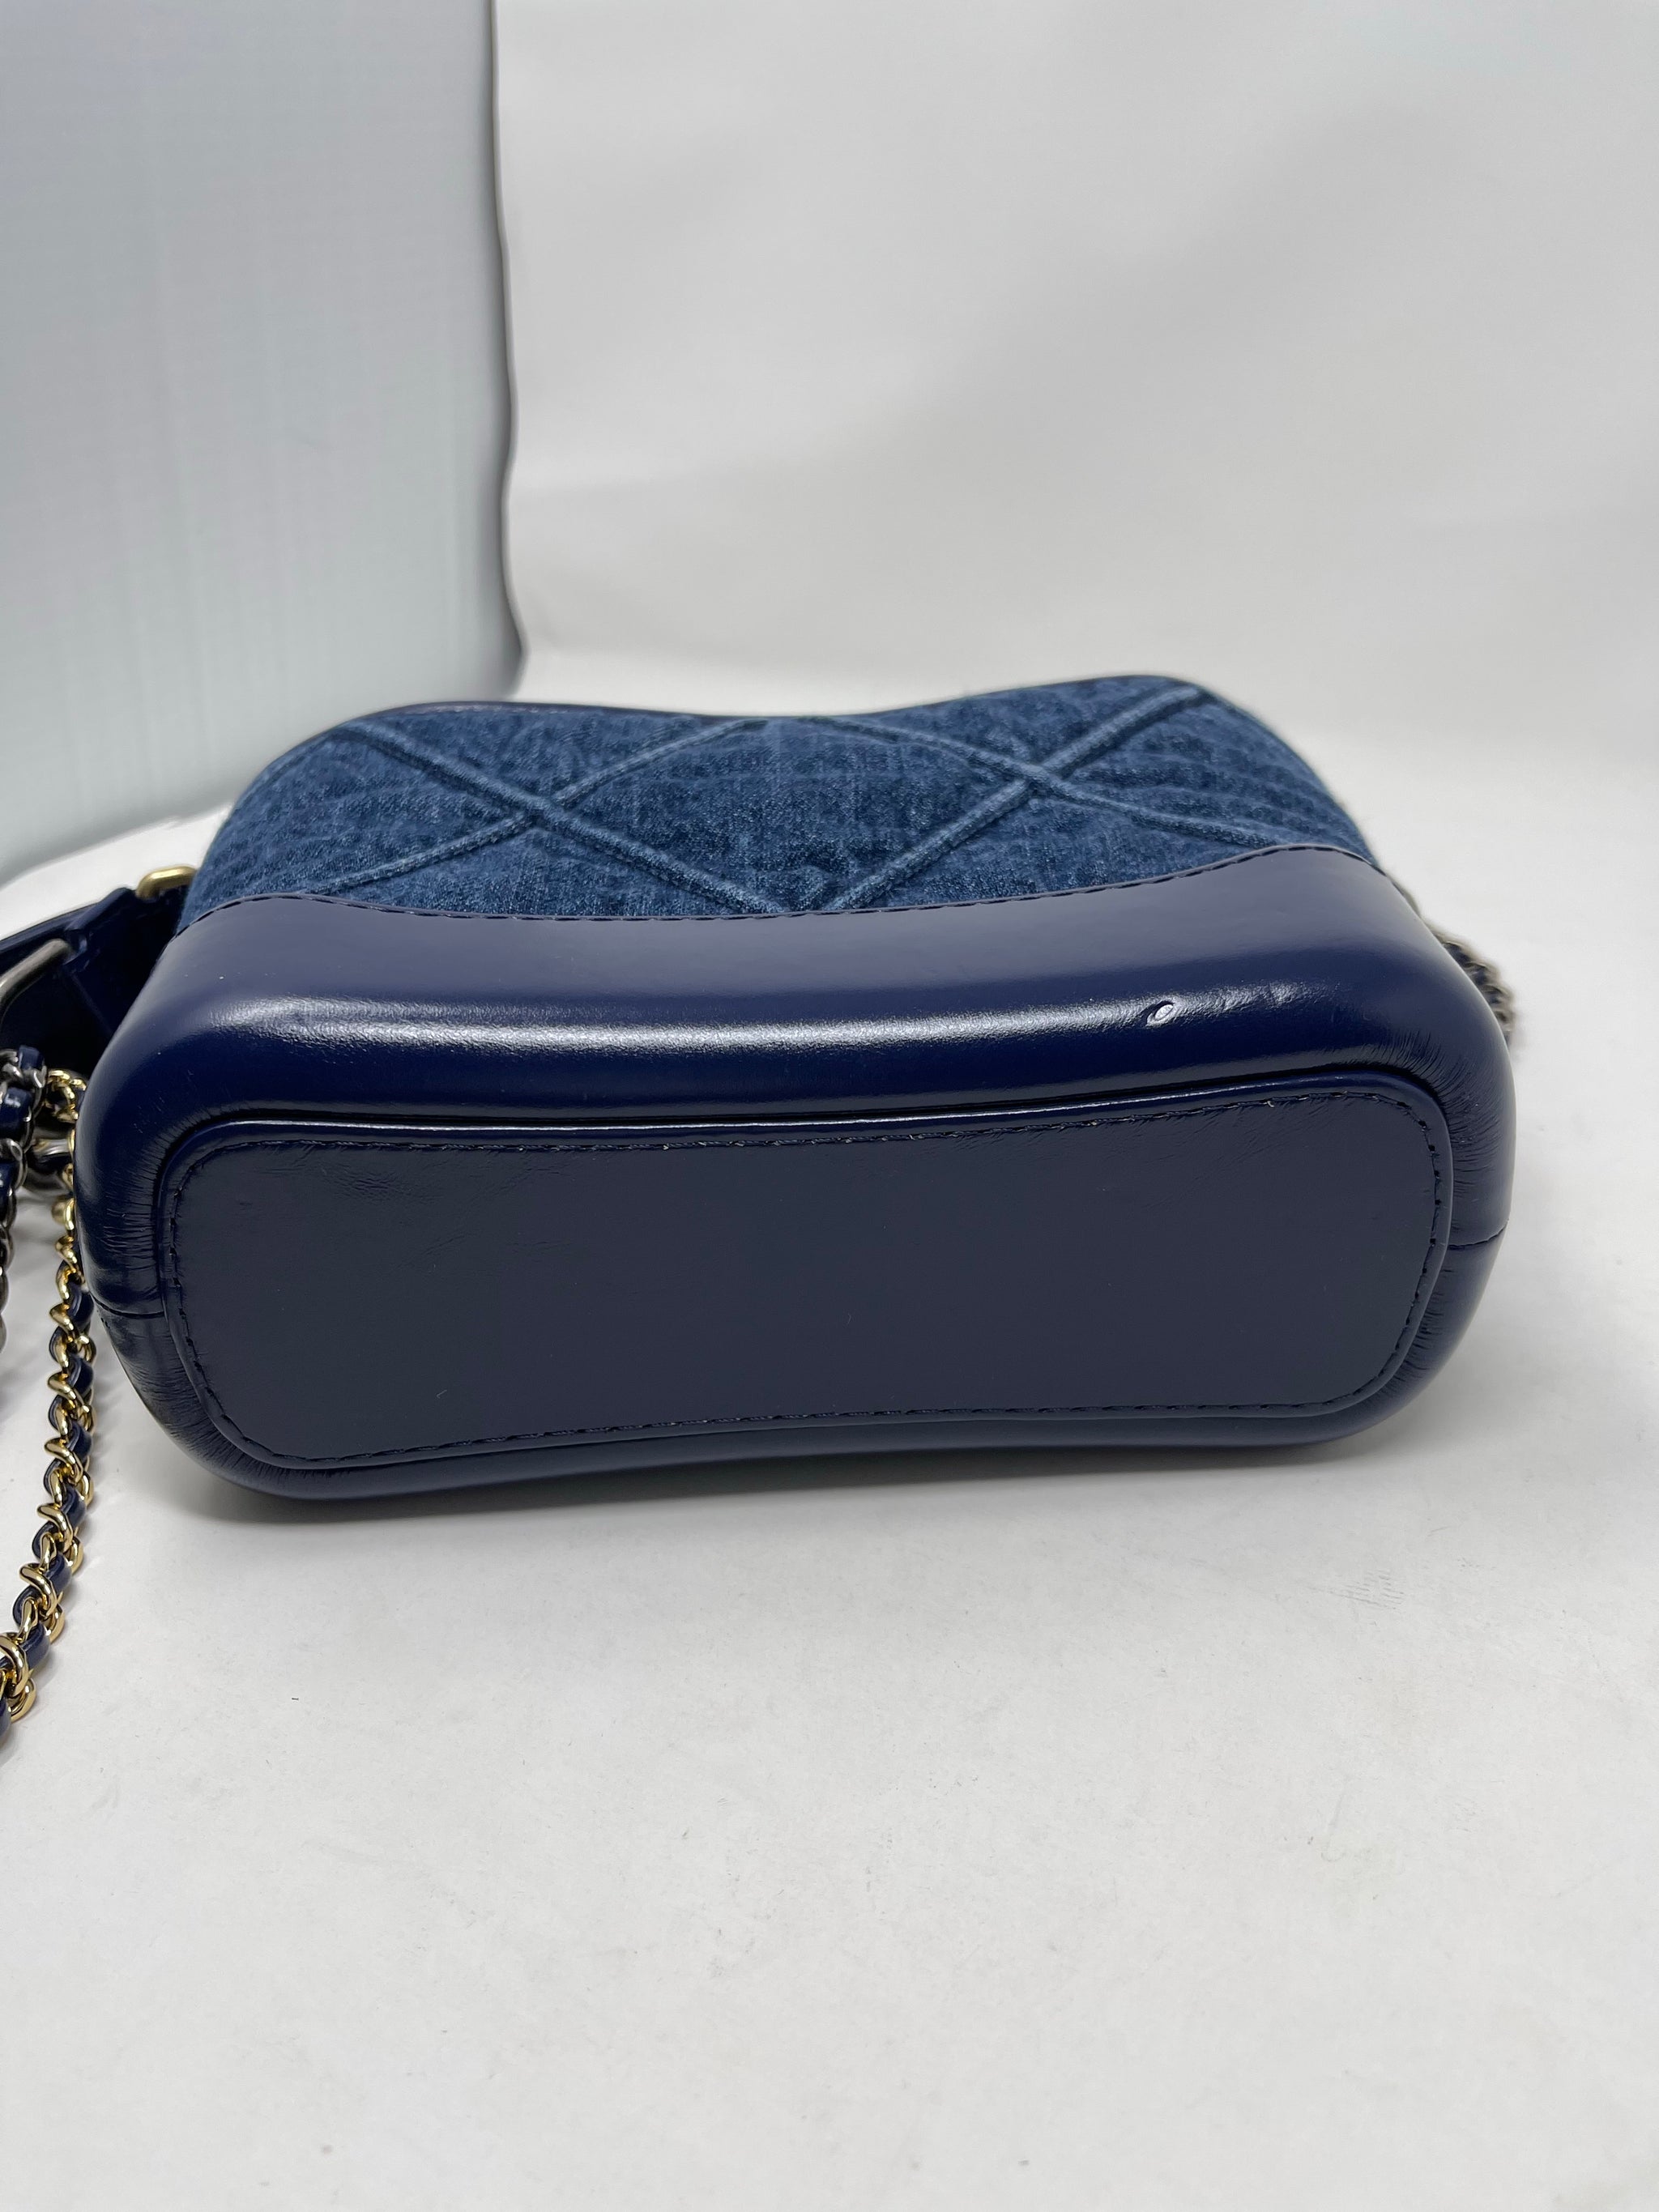 Embroidered purse, Small crossbody bag, Denim bag, Handmade - Inspire Uplift